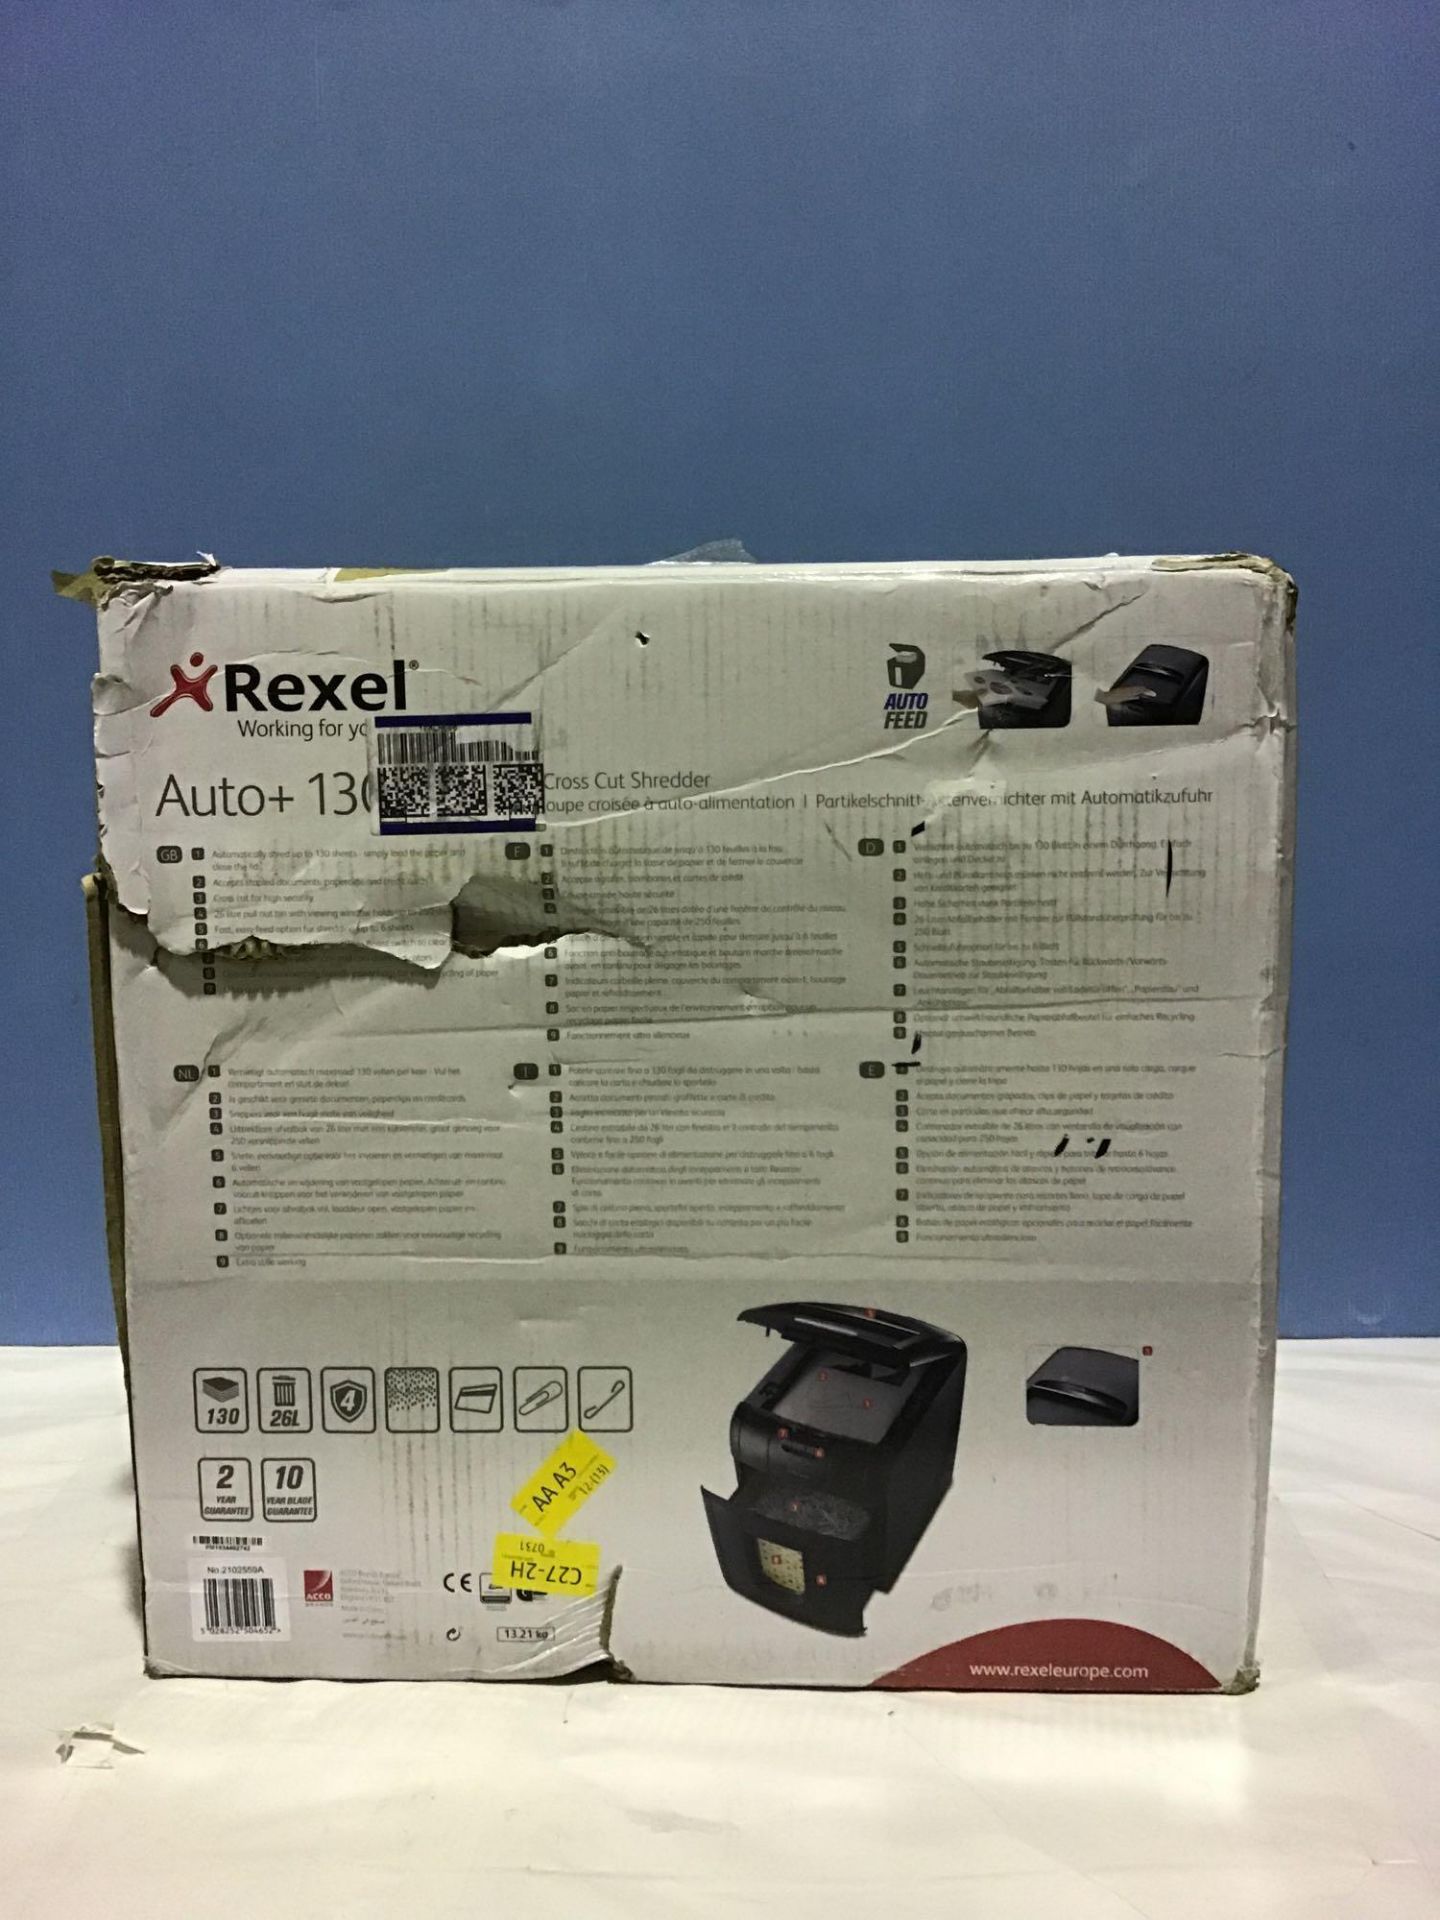 Rexel Auto+ 130X 2102559A Auto Feed 130 Sheet Cross Cut Shredder £198.28 RRP - Image 4 of 6